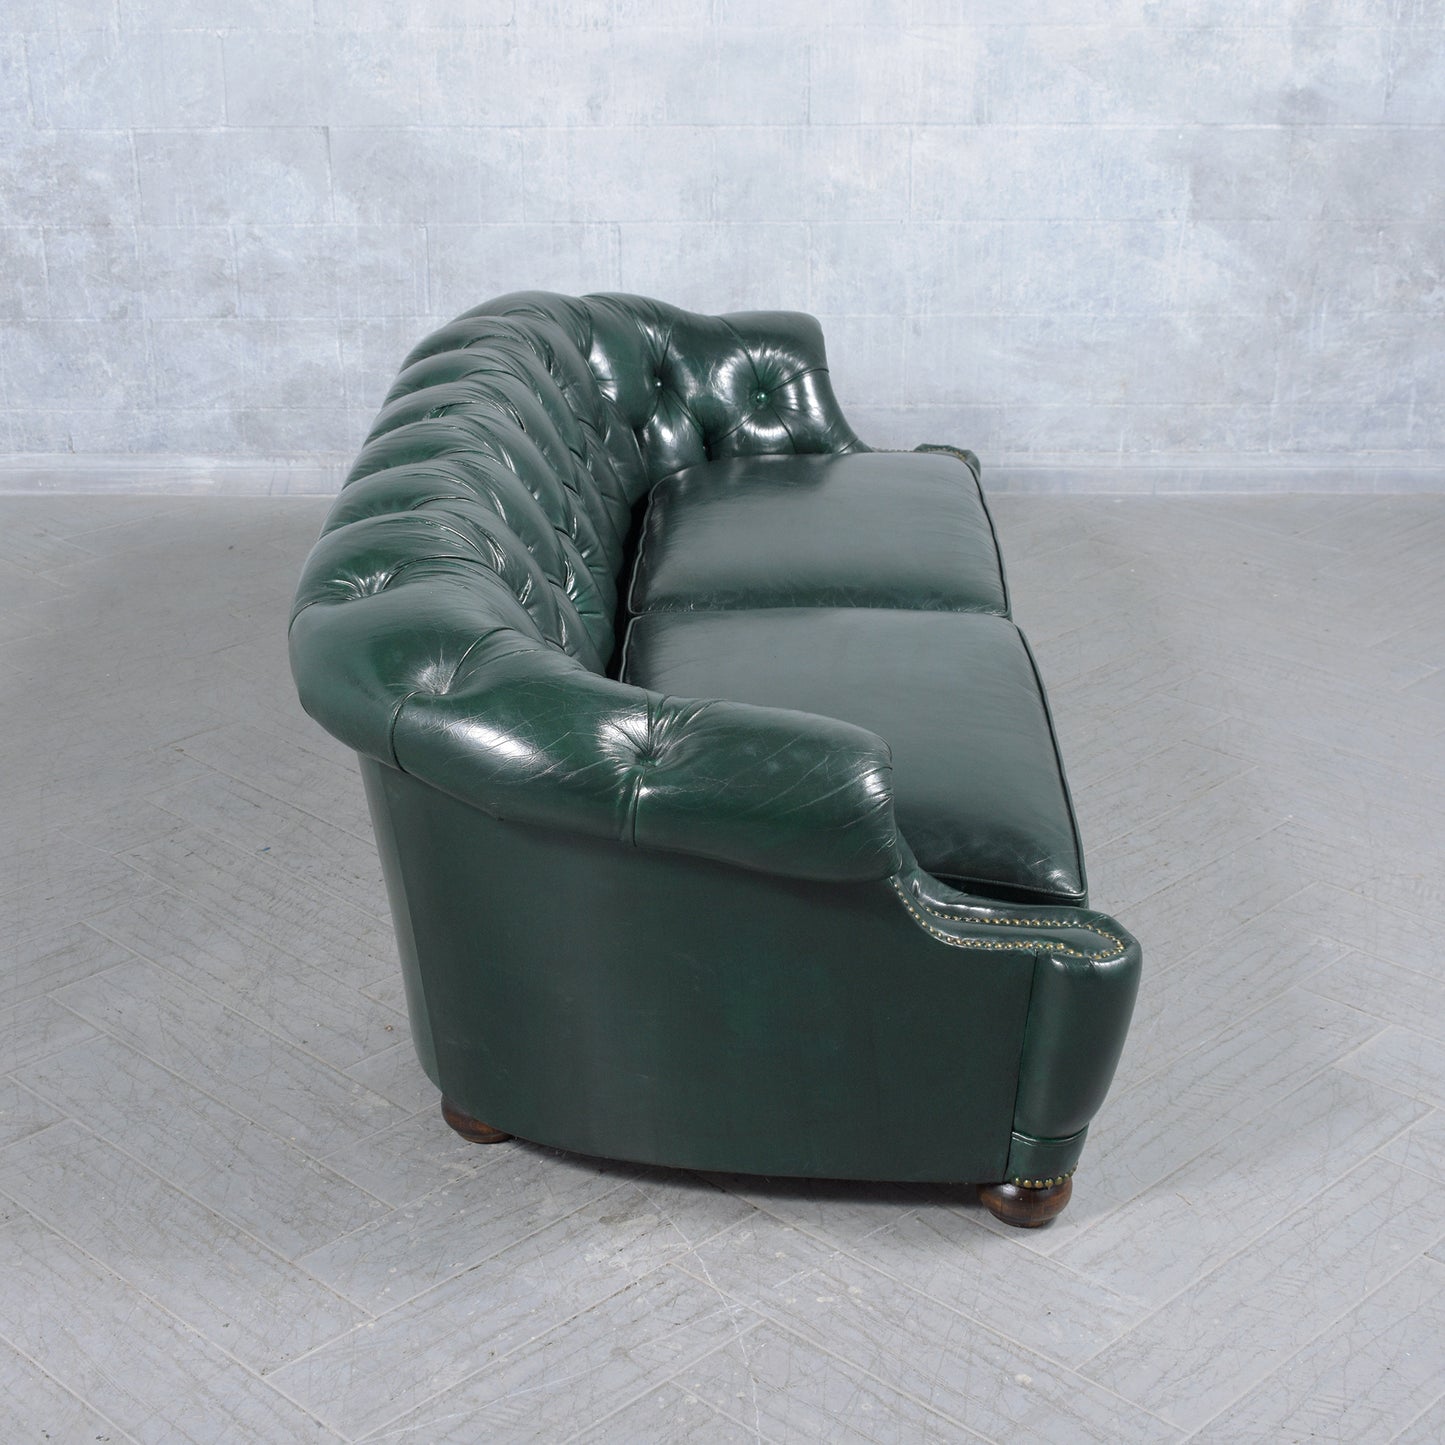 Green Vintage Chesterfield Leather Sofa - Refurbished 1970s Italian Elegance